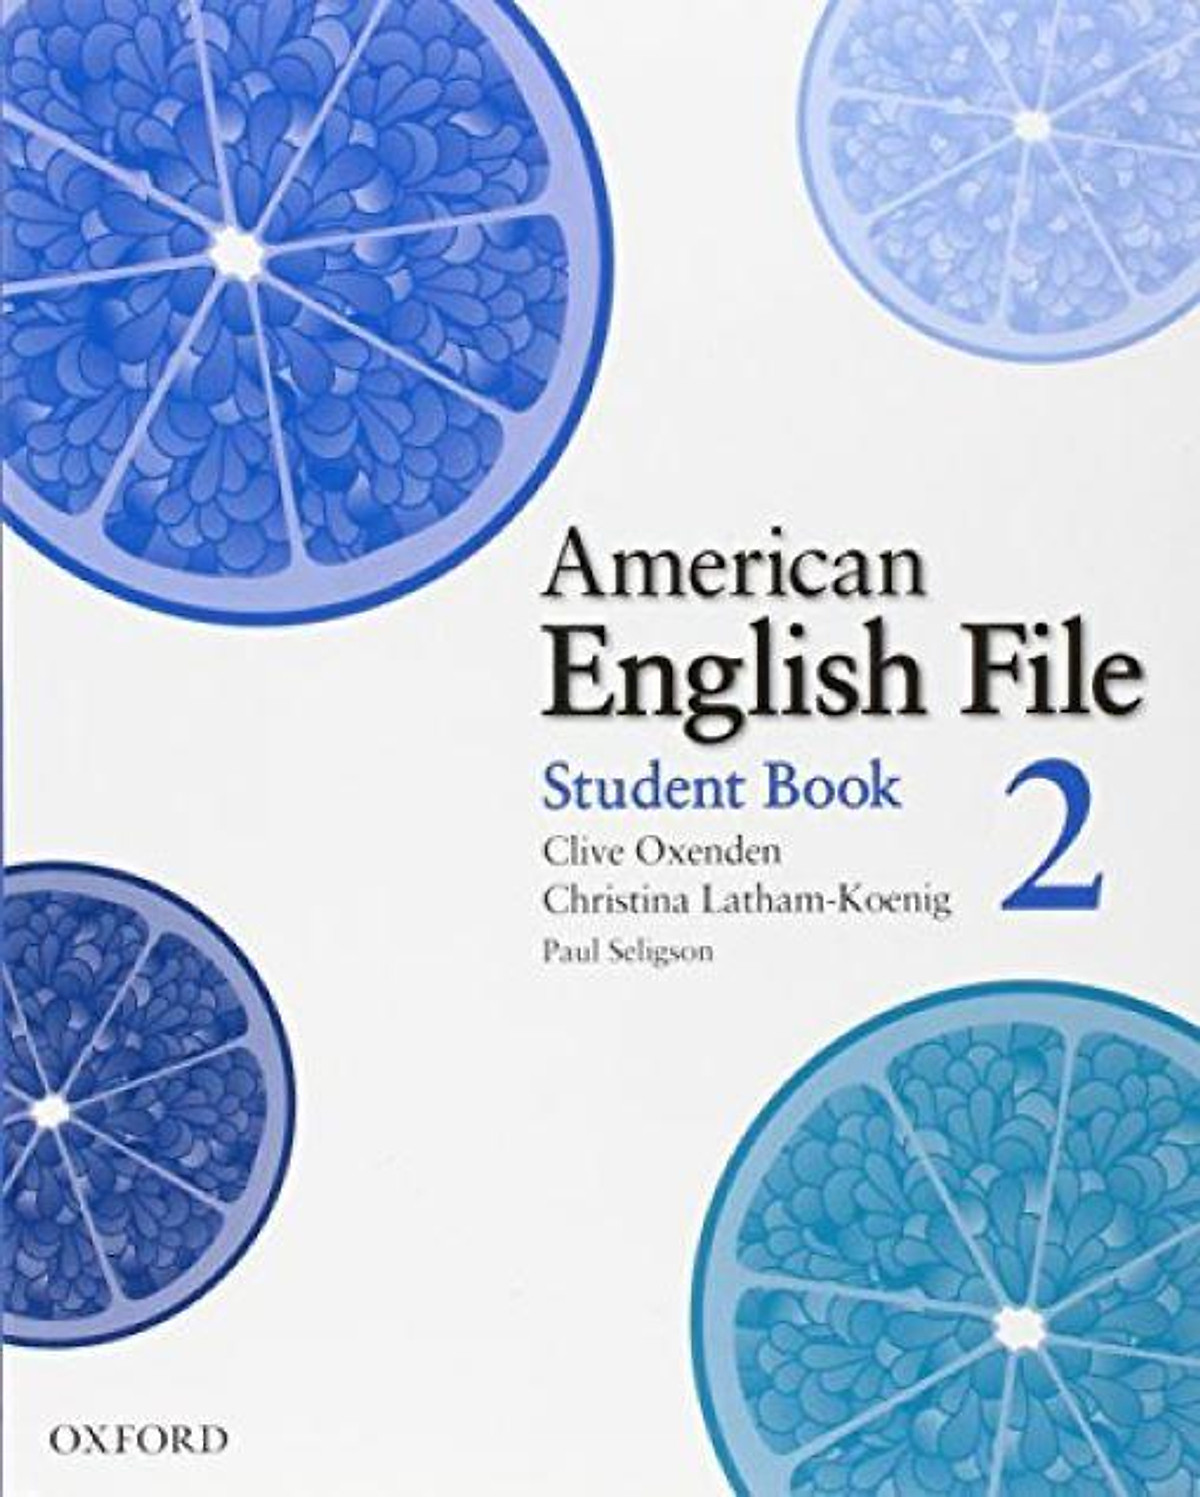 American English File Level 2: Student Book